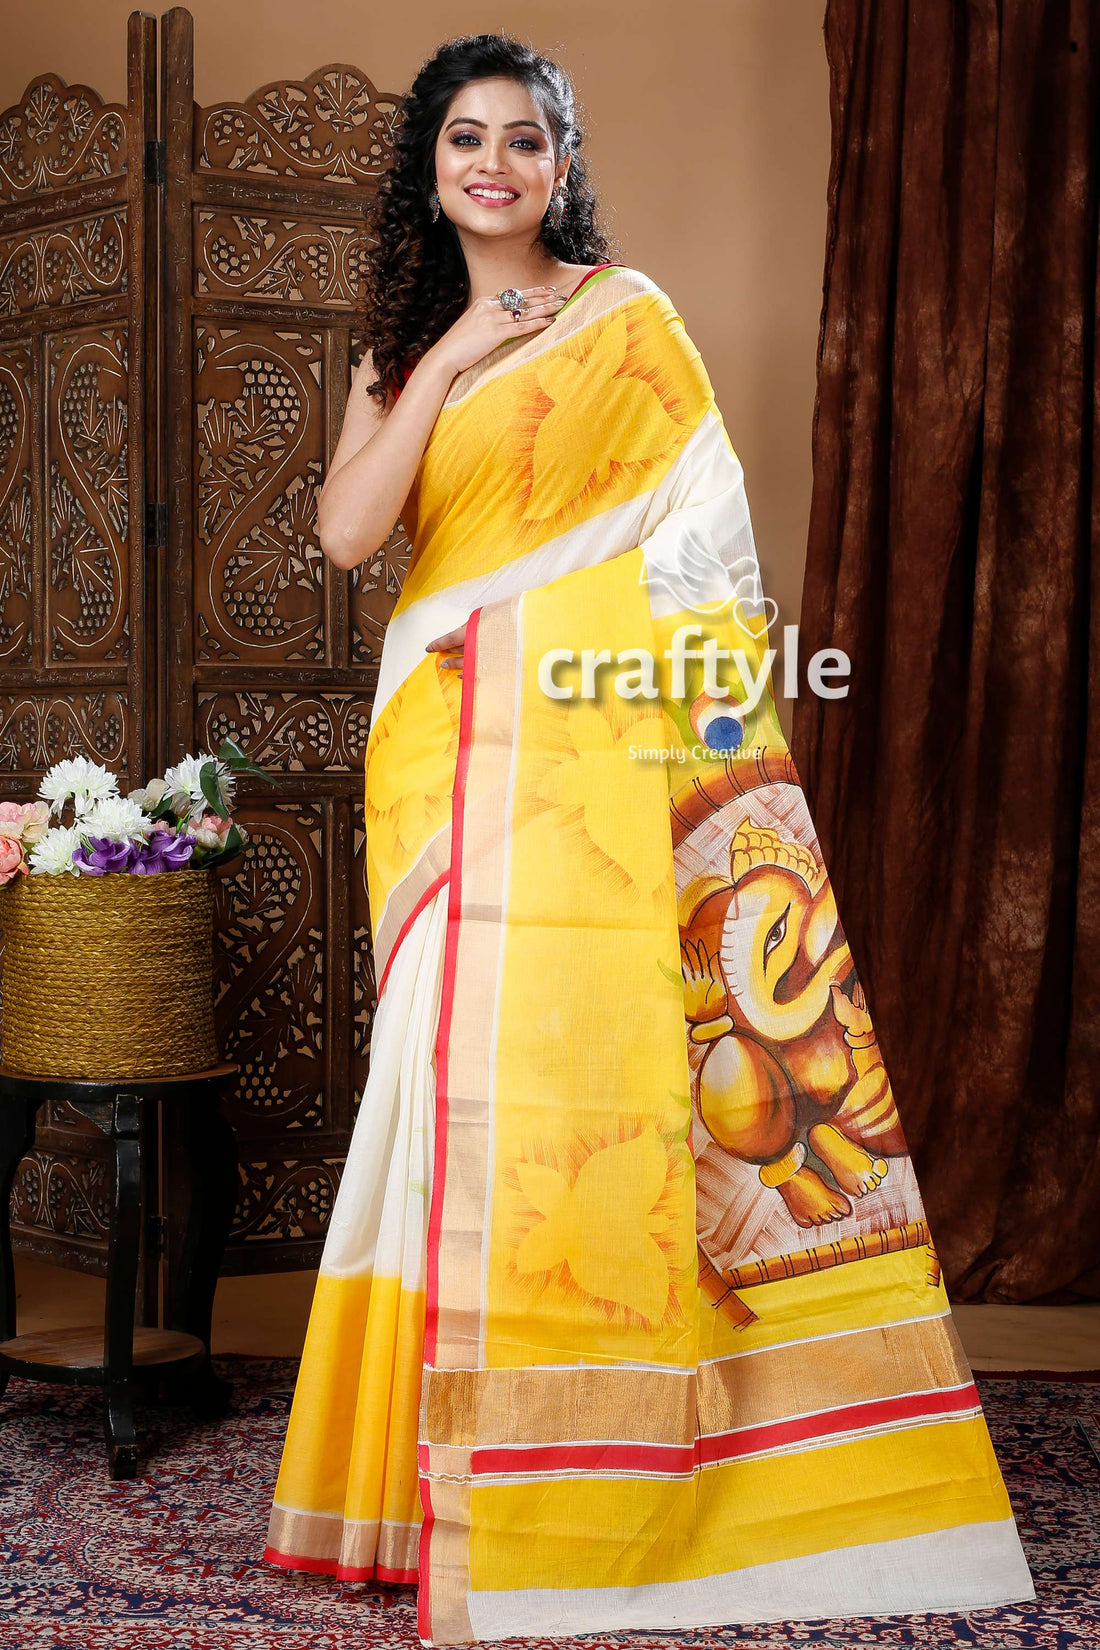 Ganesha Hand Painted Pineapple Yellow Kerala Cotton Saree-Craftyle